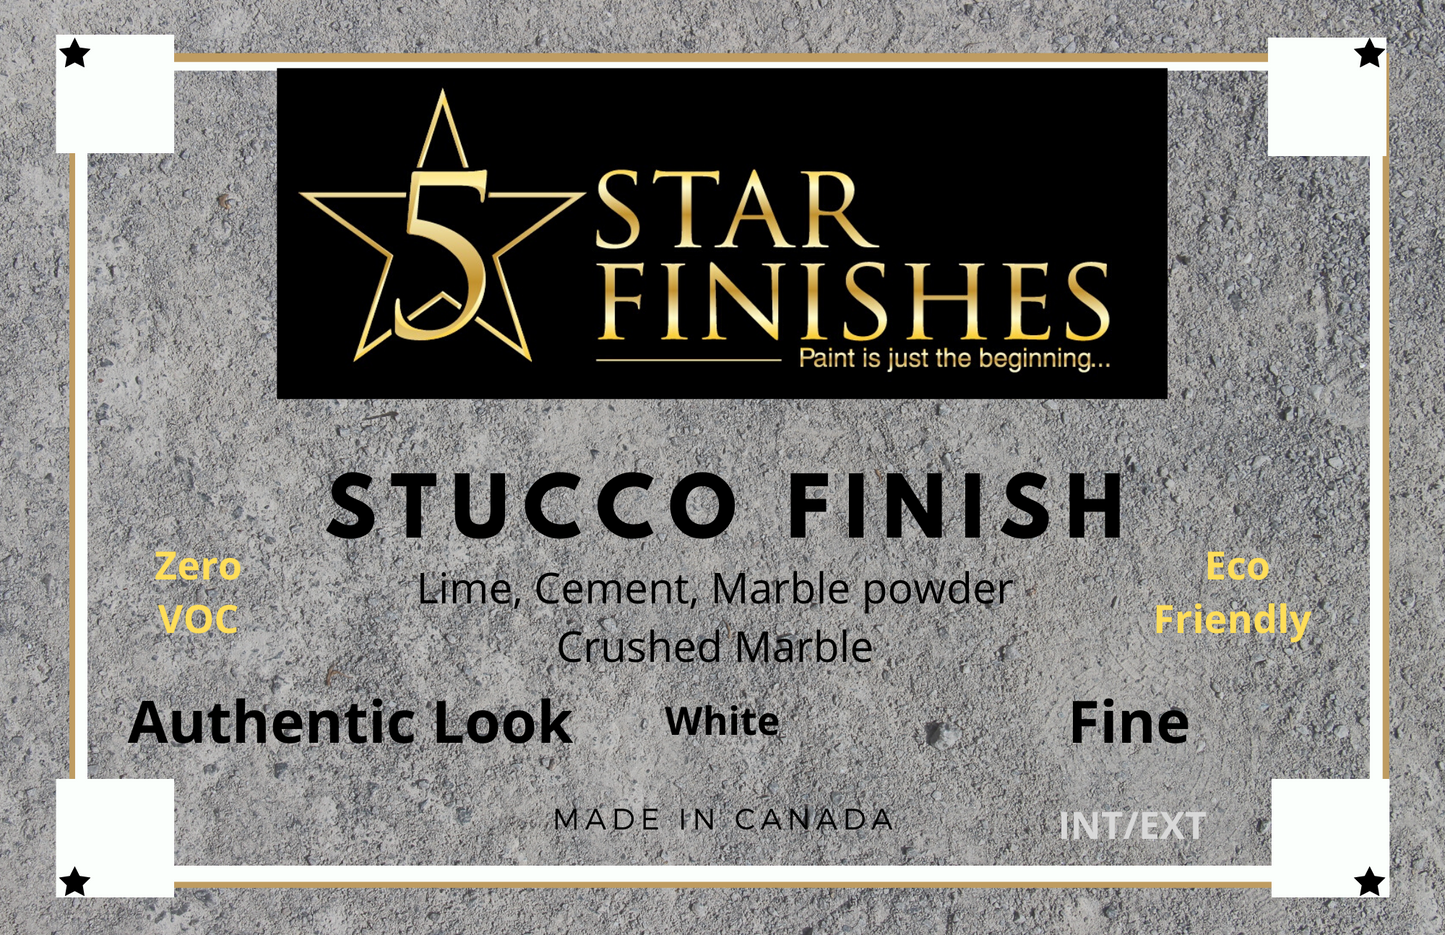 Stucco Finish - 5 Star Finishes Ltd